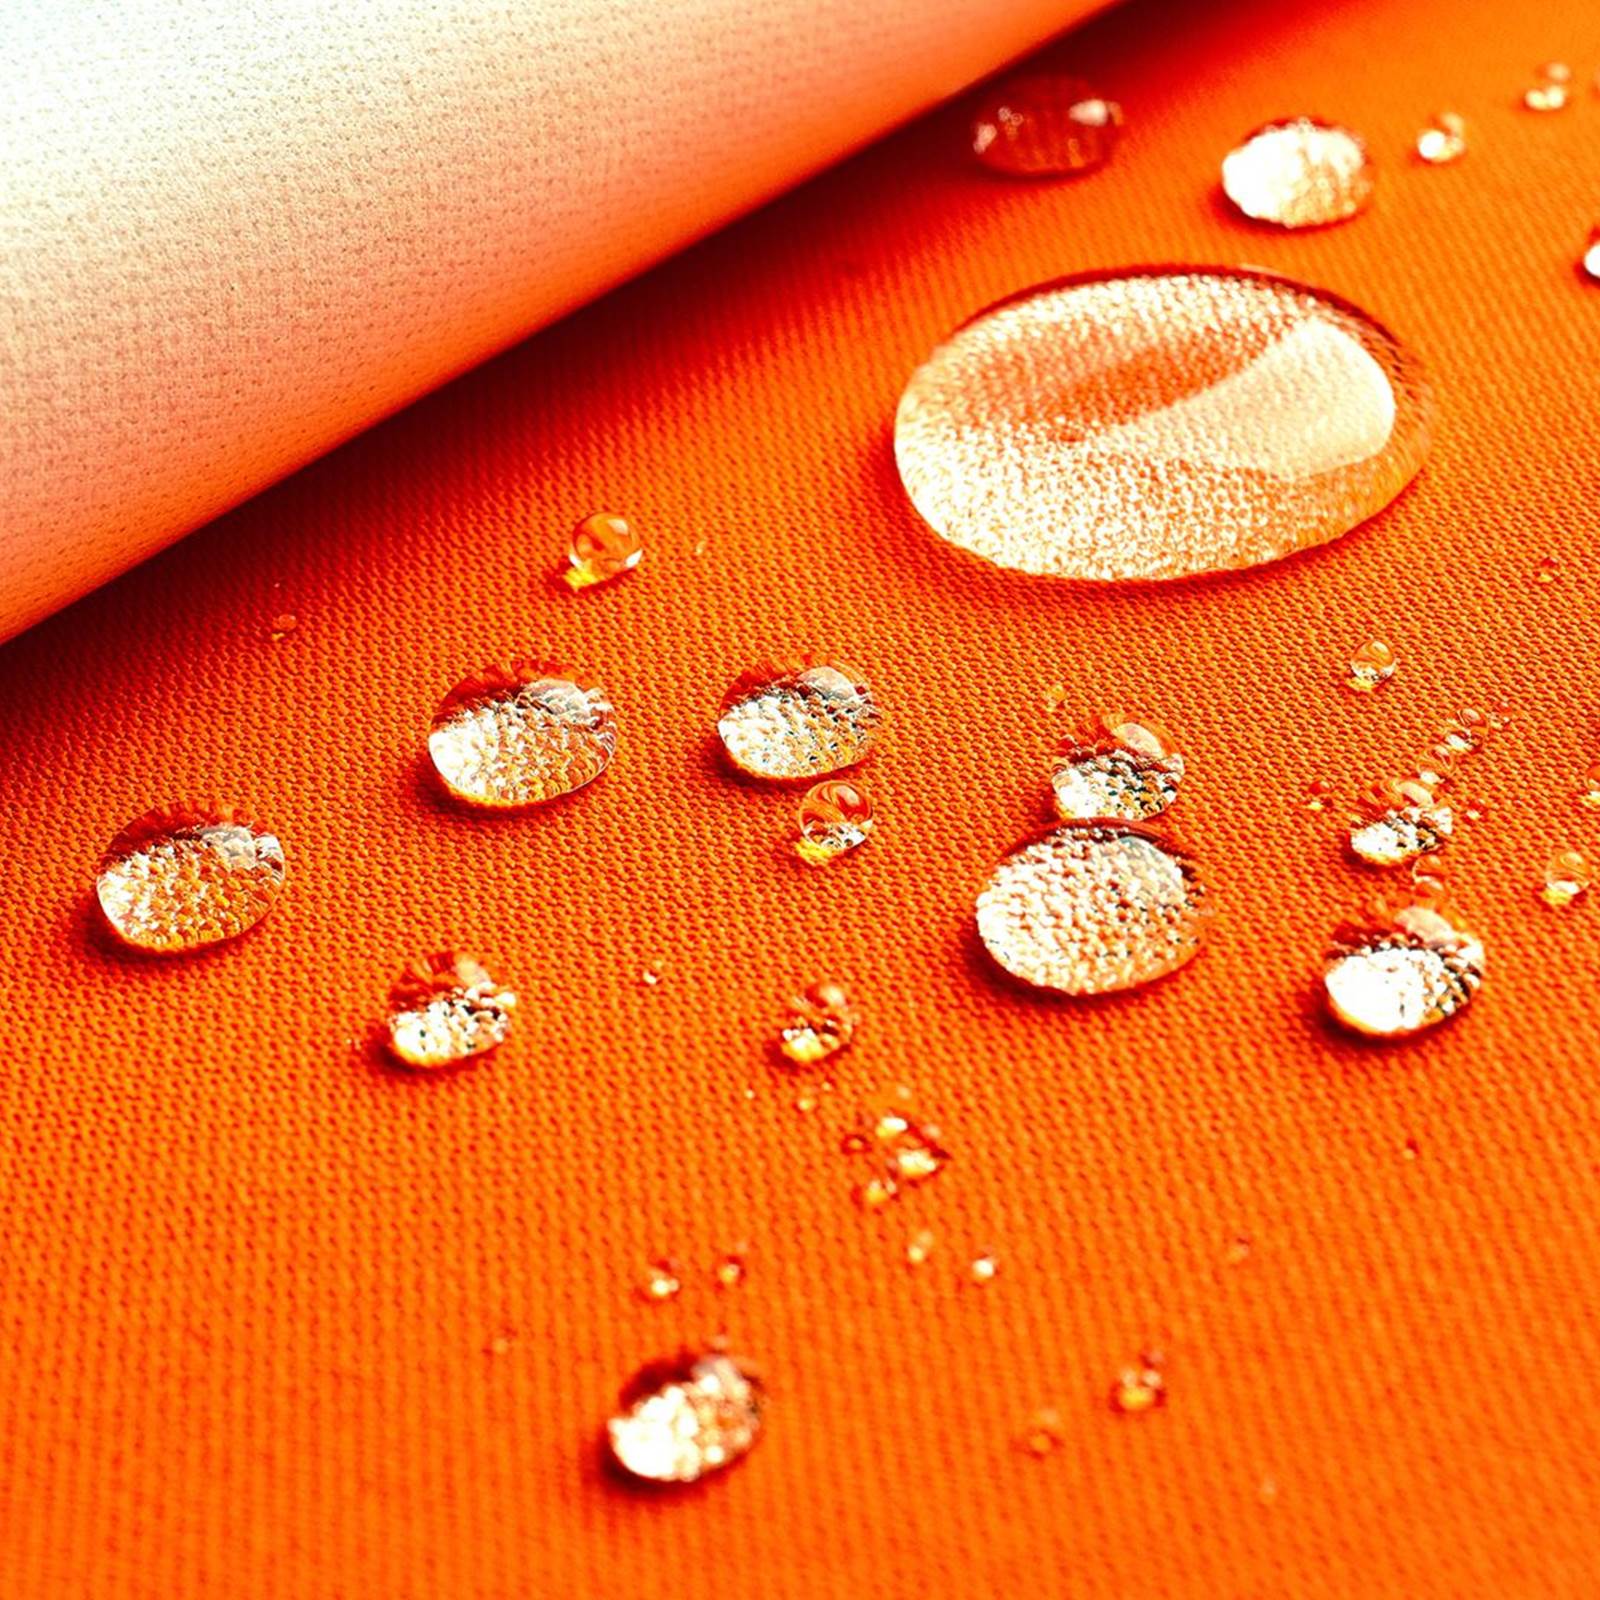 Greta - Tecido para exteriores laminado (laranja fluorescente)